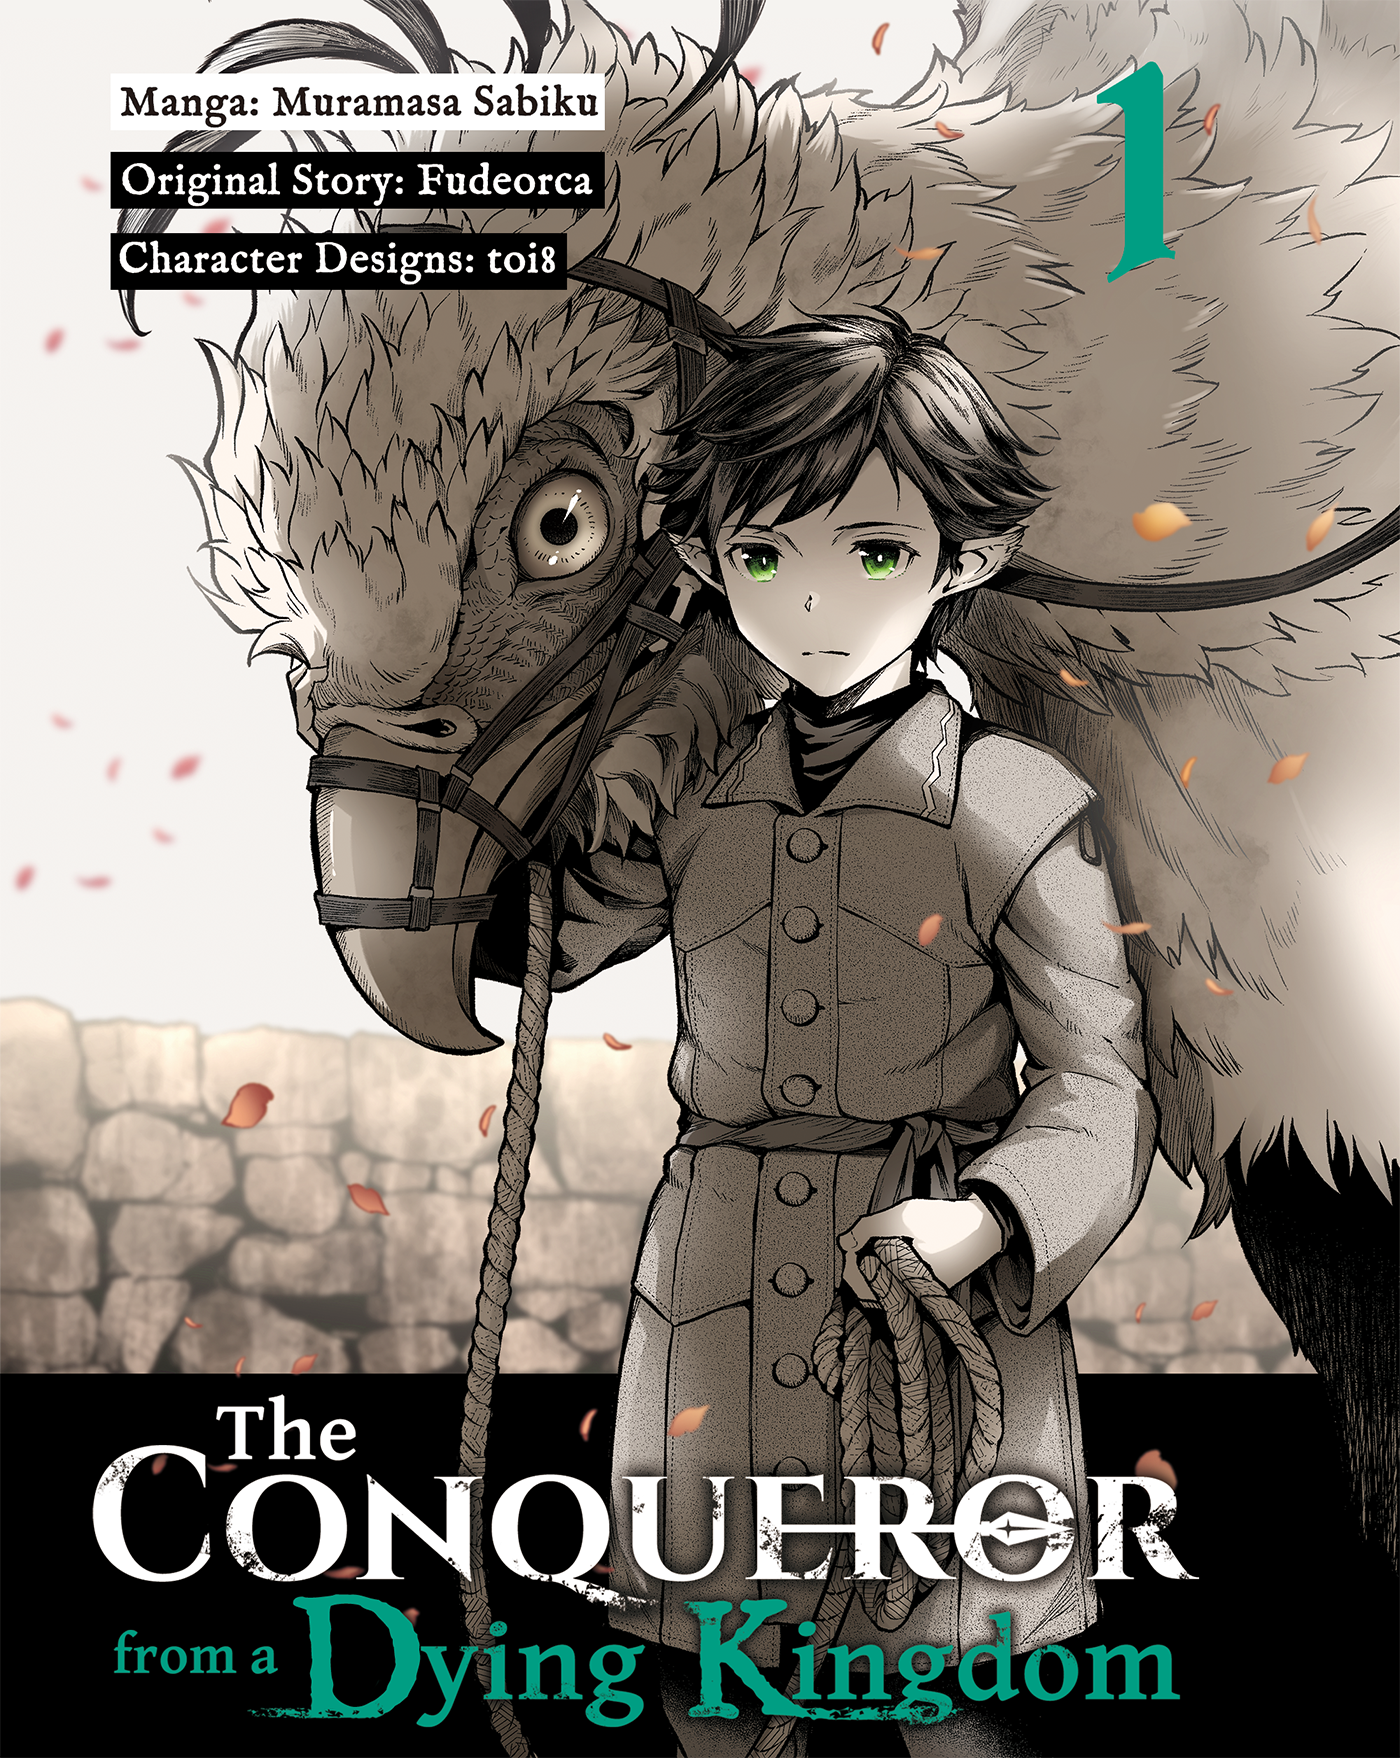 The Conqueror from a Dying Kingdom (Manga) by Muramasa Sabiku (Art), Fudeorca (Story), toi8 (Character Designs)